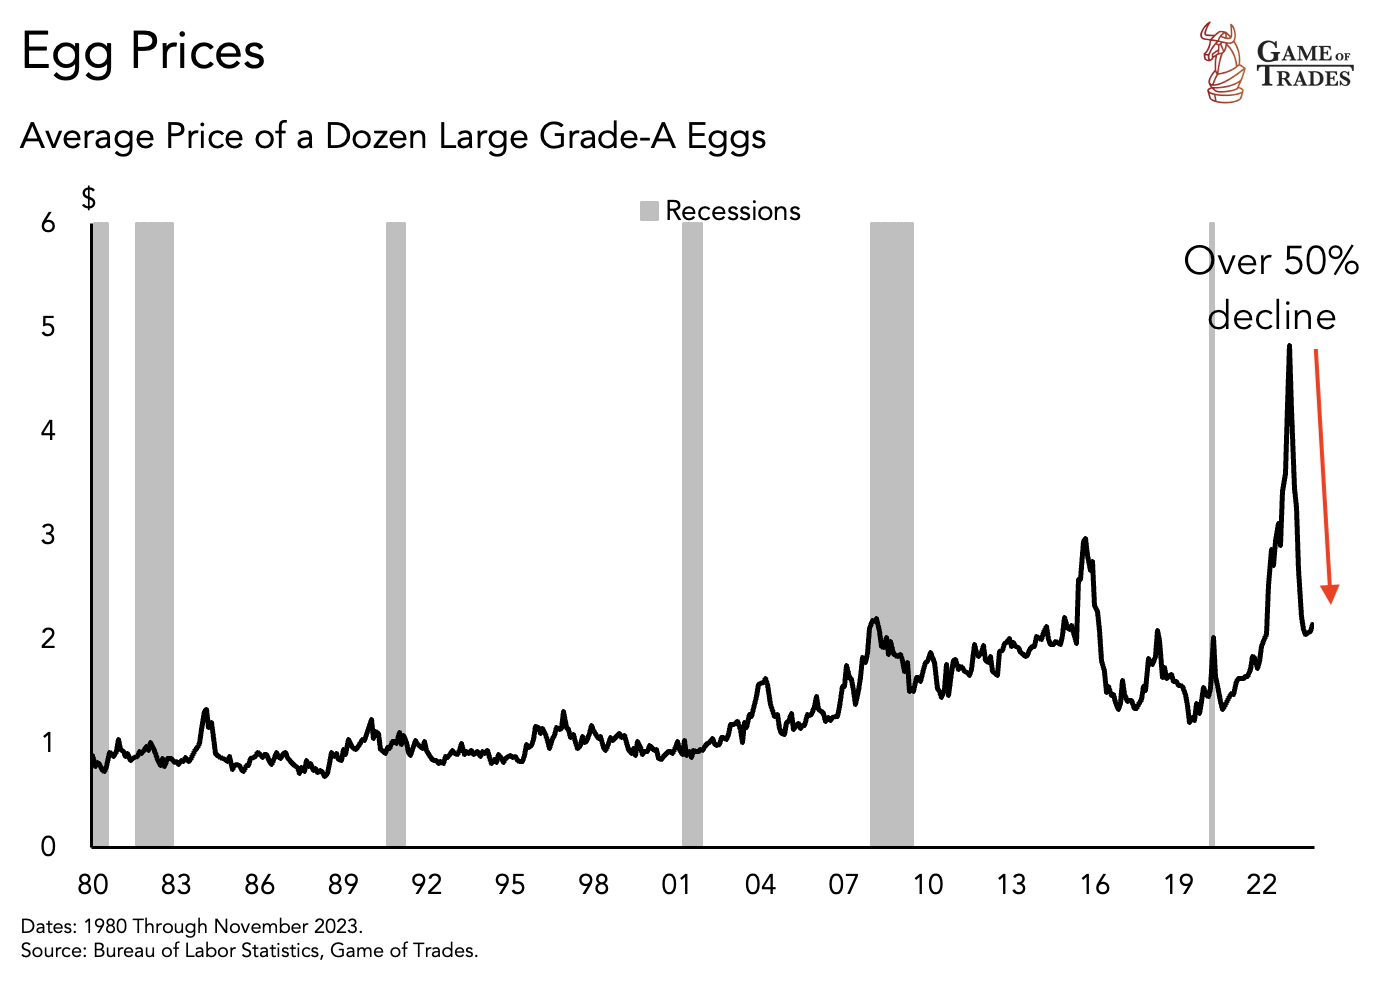 Egg prices deflation